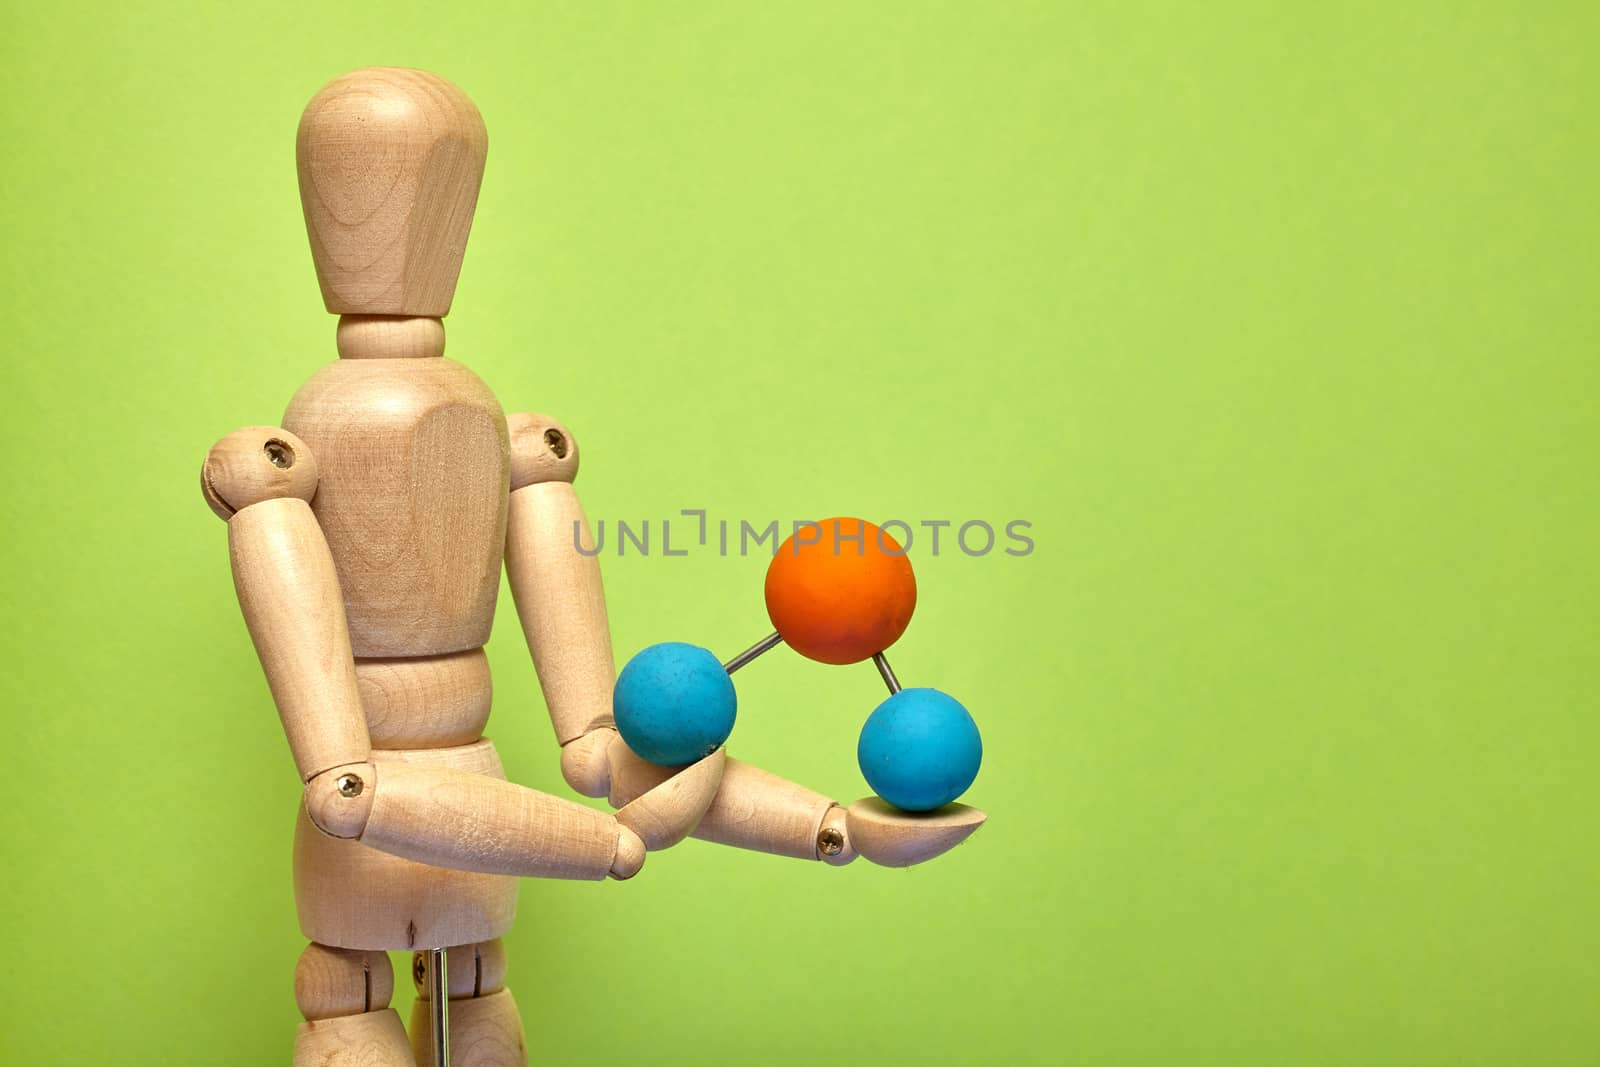 Puppet molecule by Portokalis